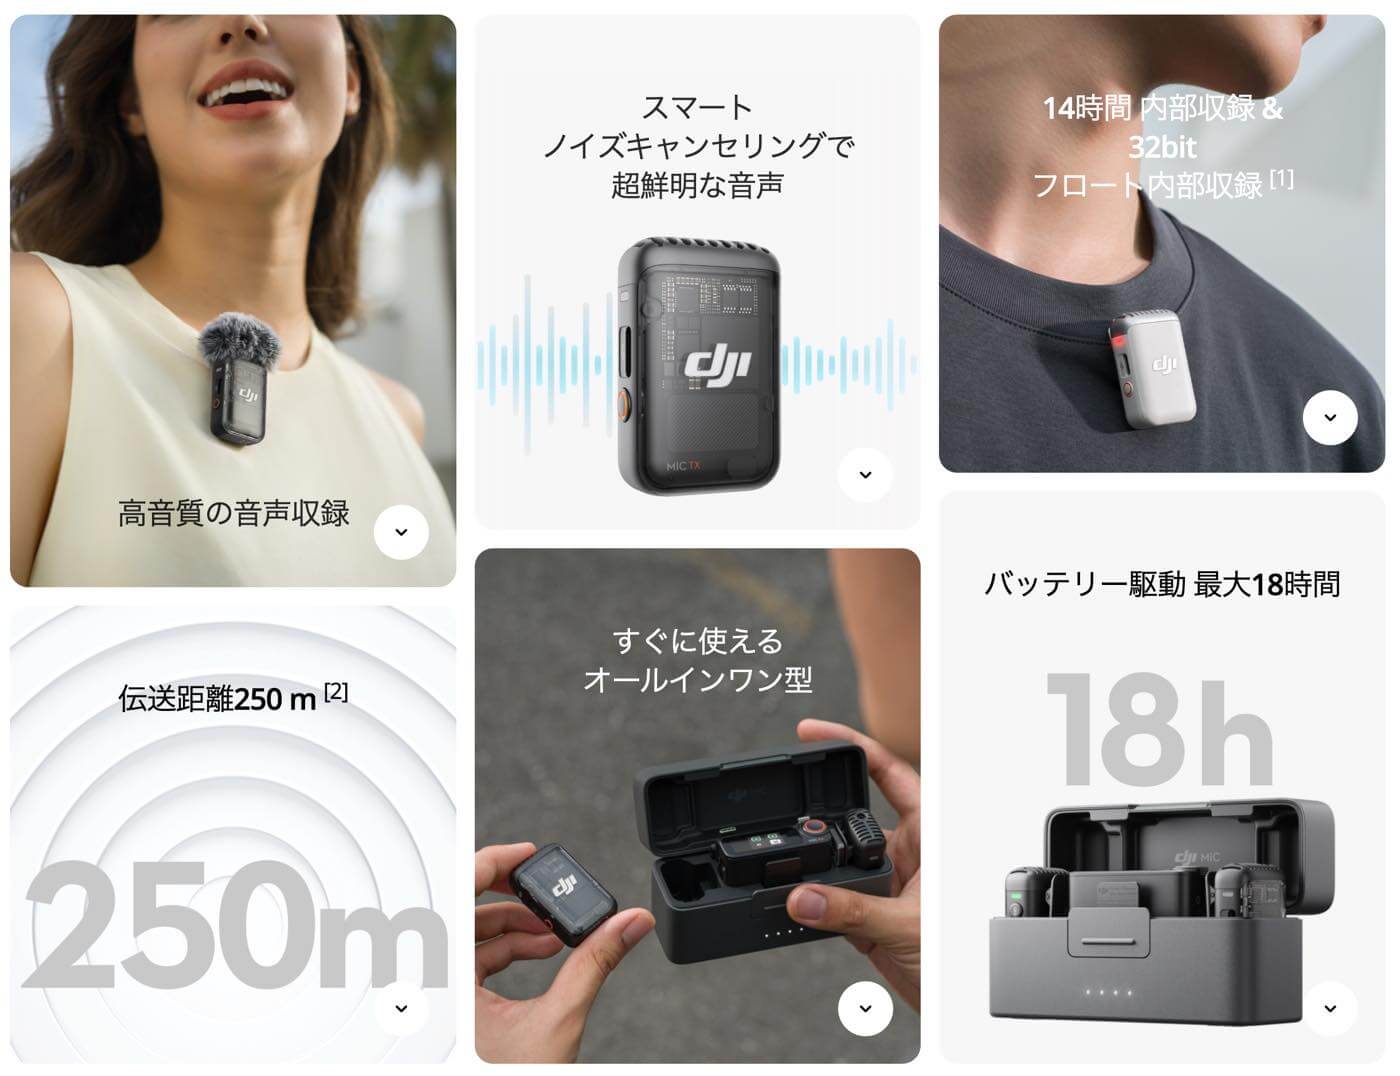 DJI、新型ワイヤレスマイク『DJI Mic 2』を発表 ｰ 無指向性録音やスマートノイズキャンセリングに対応